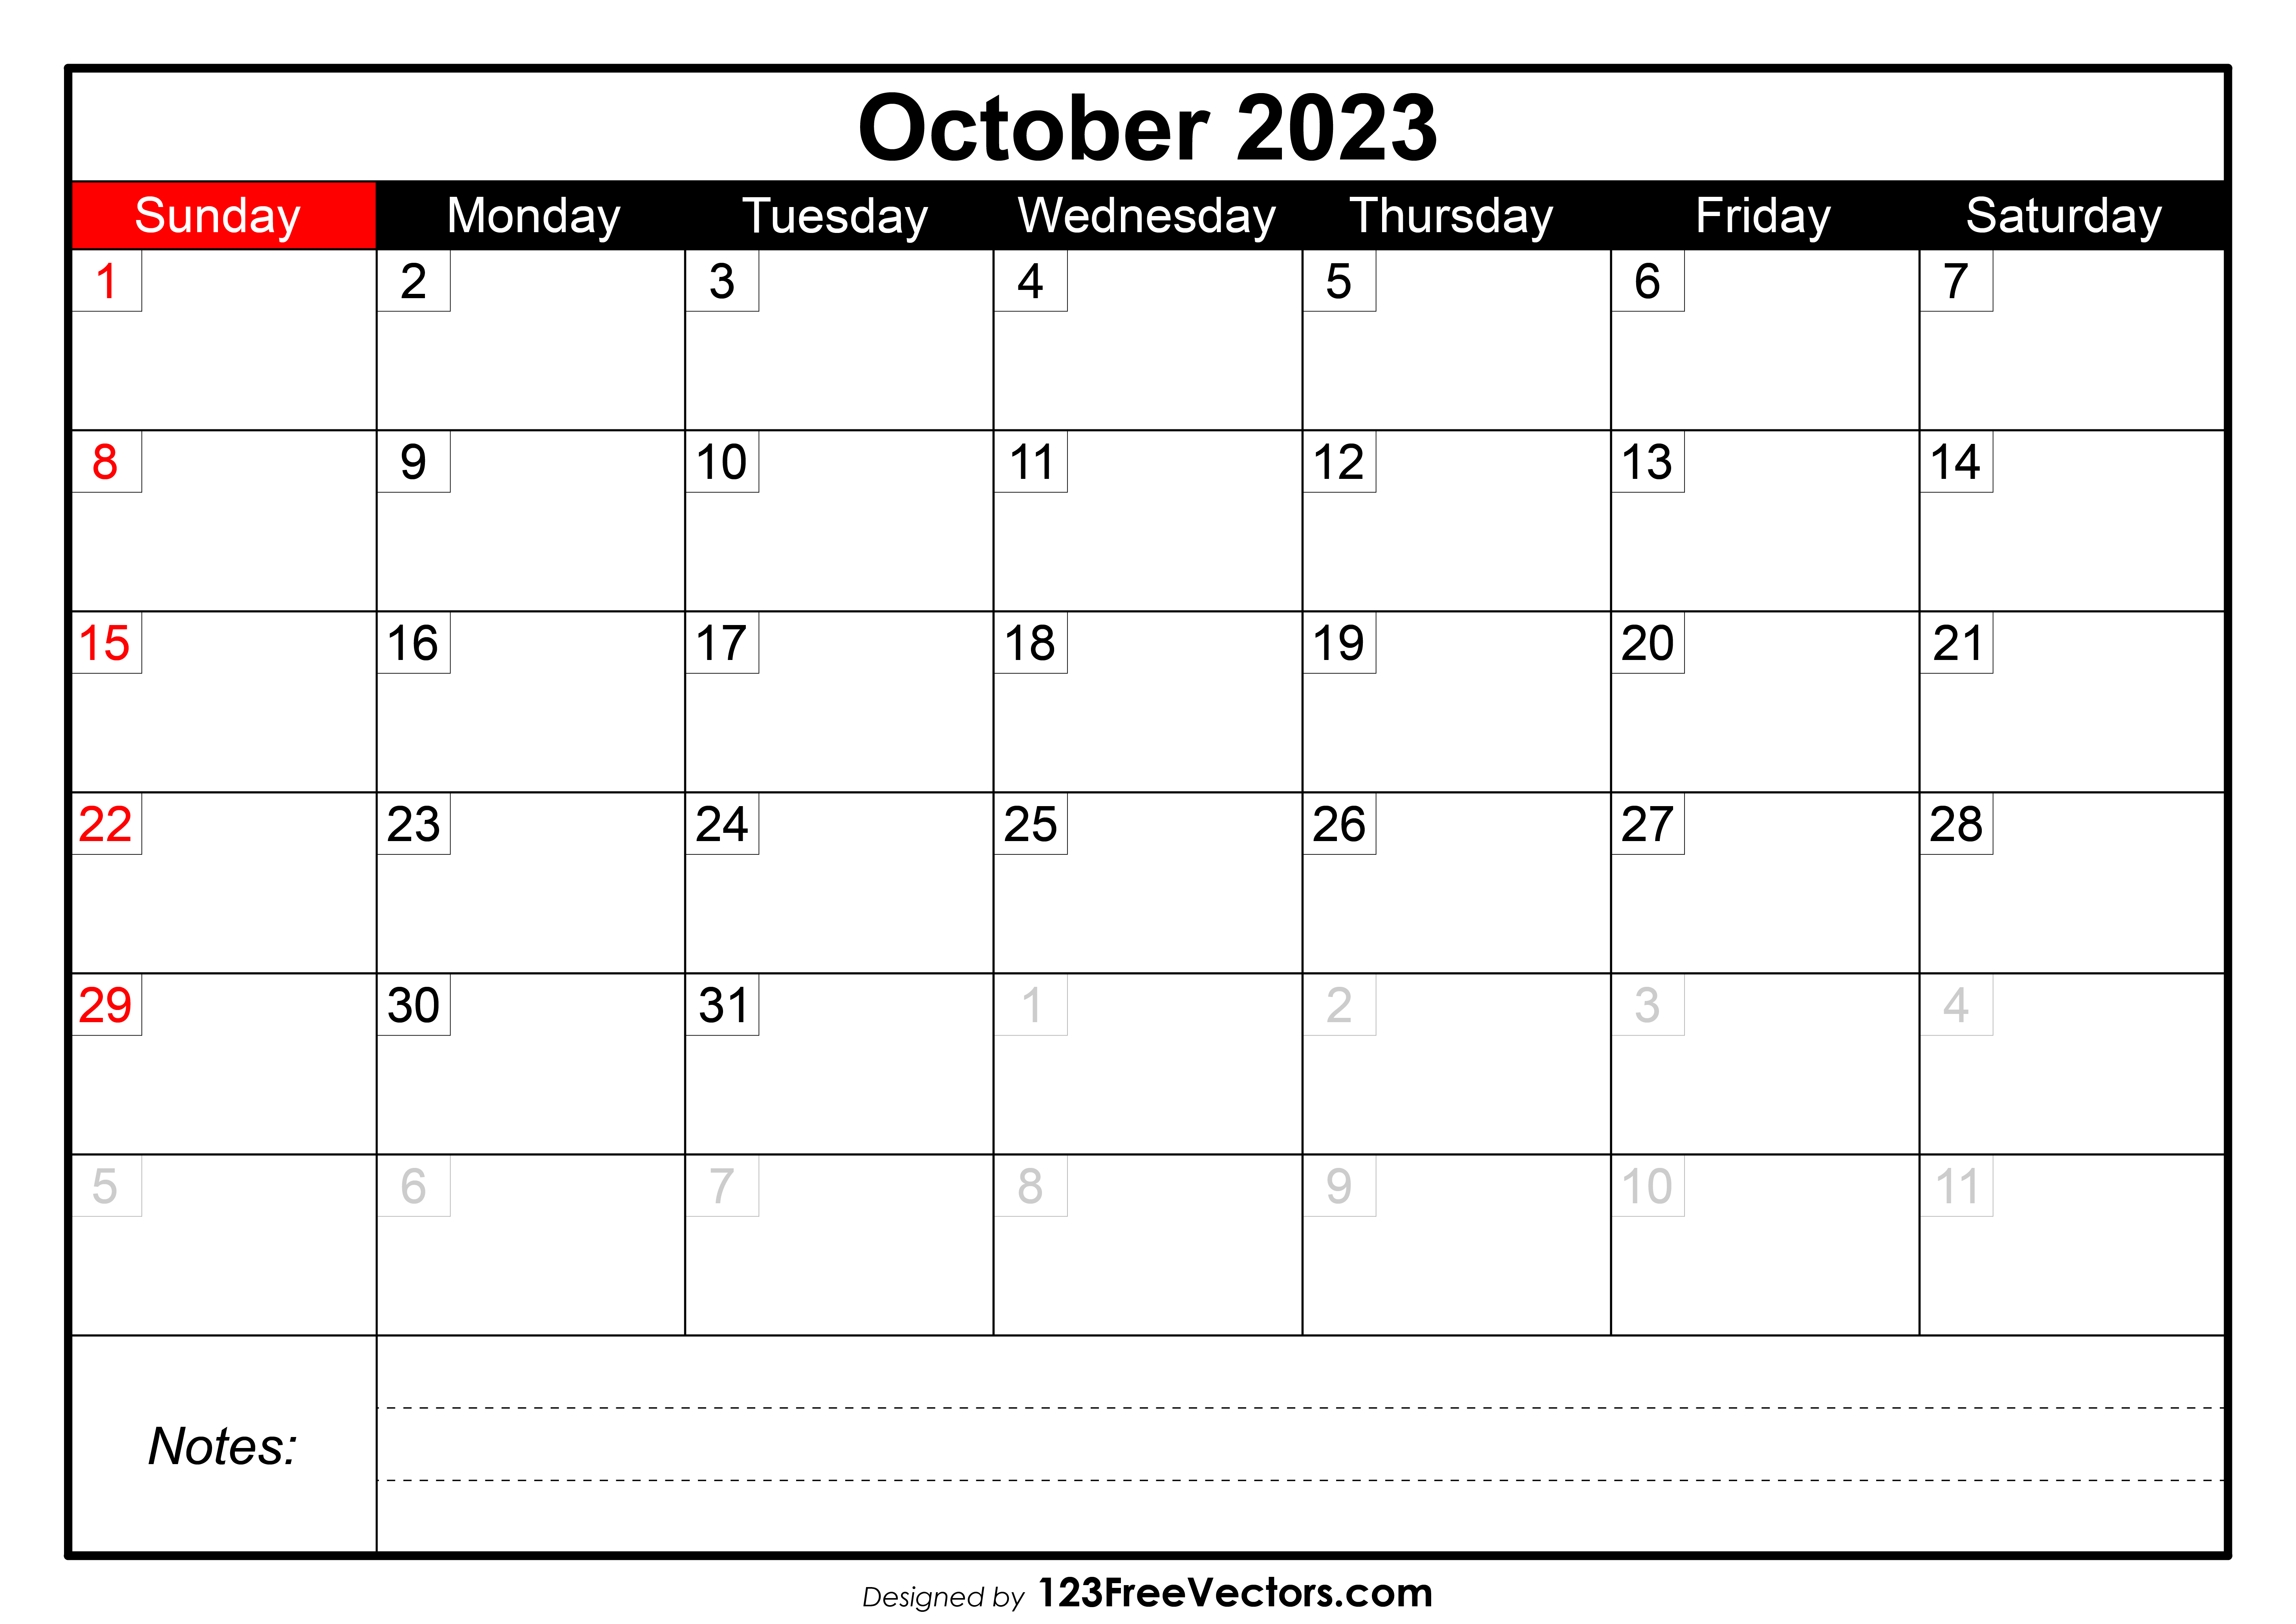 Free October Calendar 2023